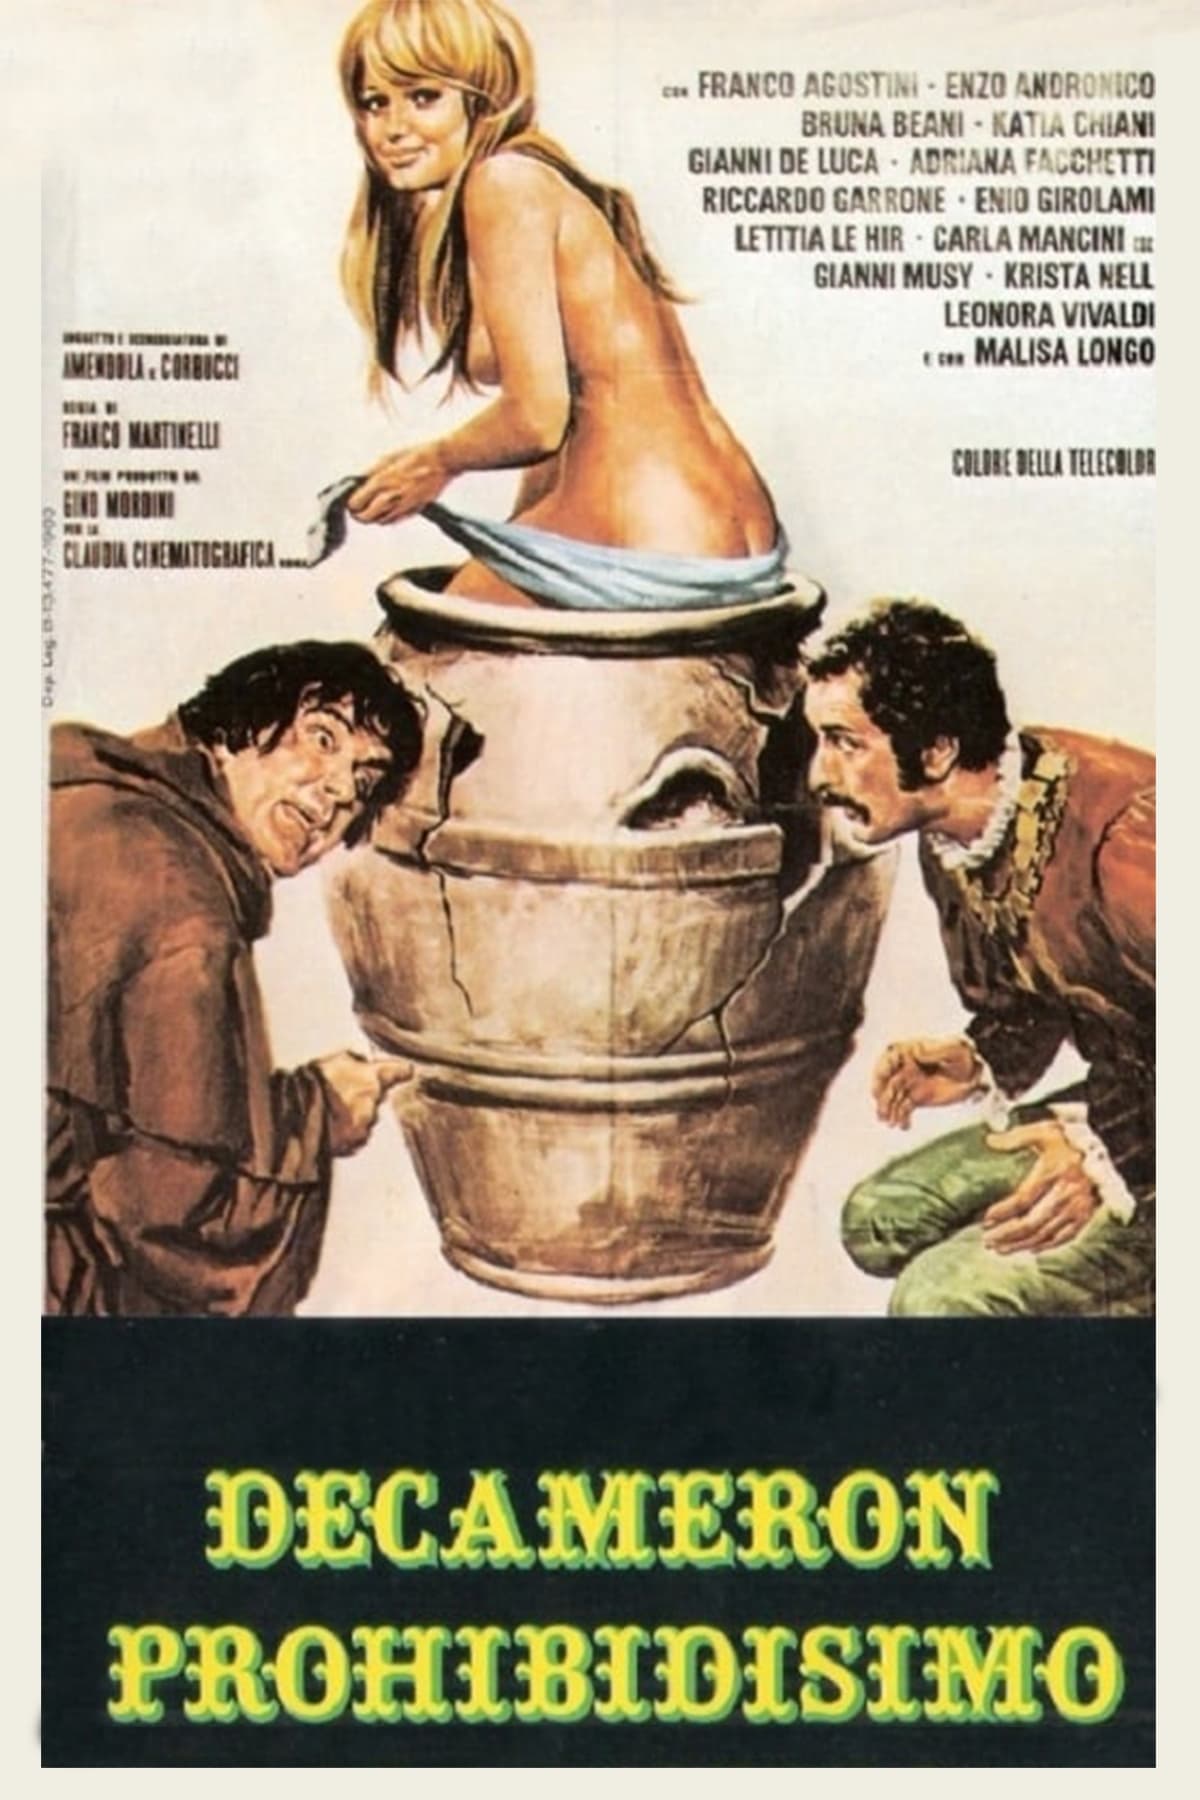 Sexy Sinners (1972)